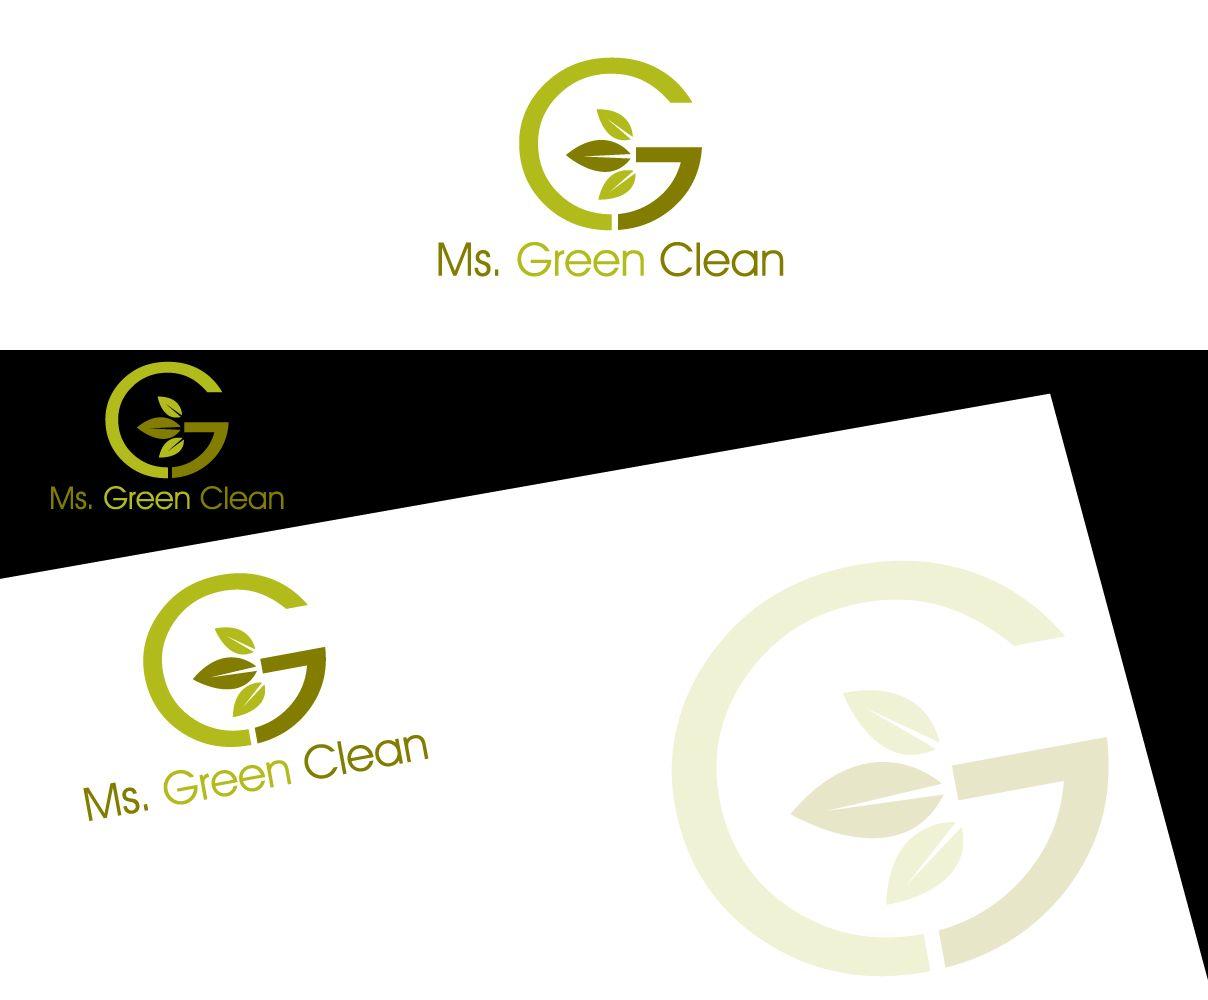 Green Eye Company Logo - Upmarket, Modern Logo Design for Ms. Green Clean by blue eye ...